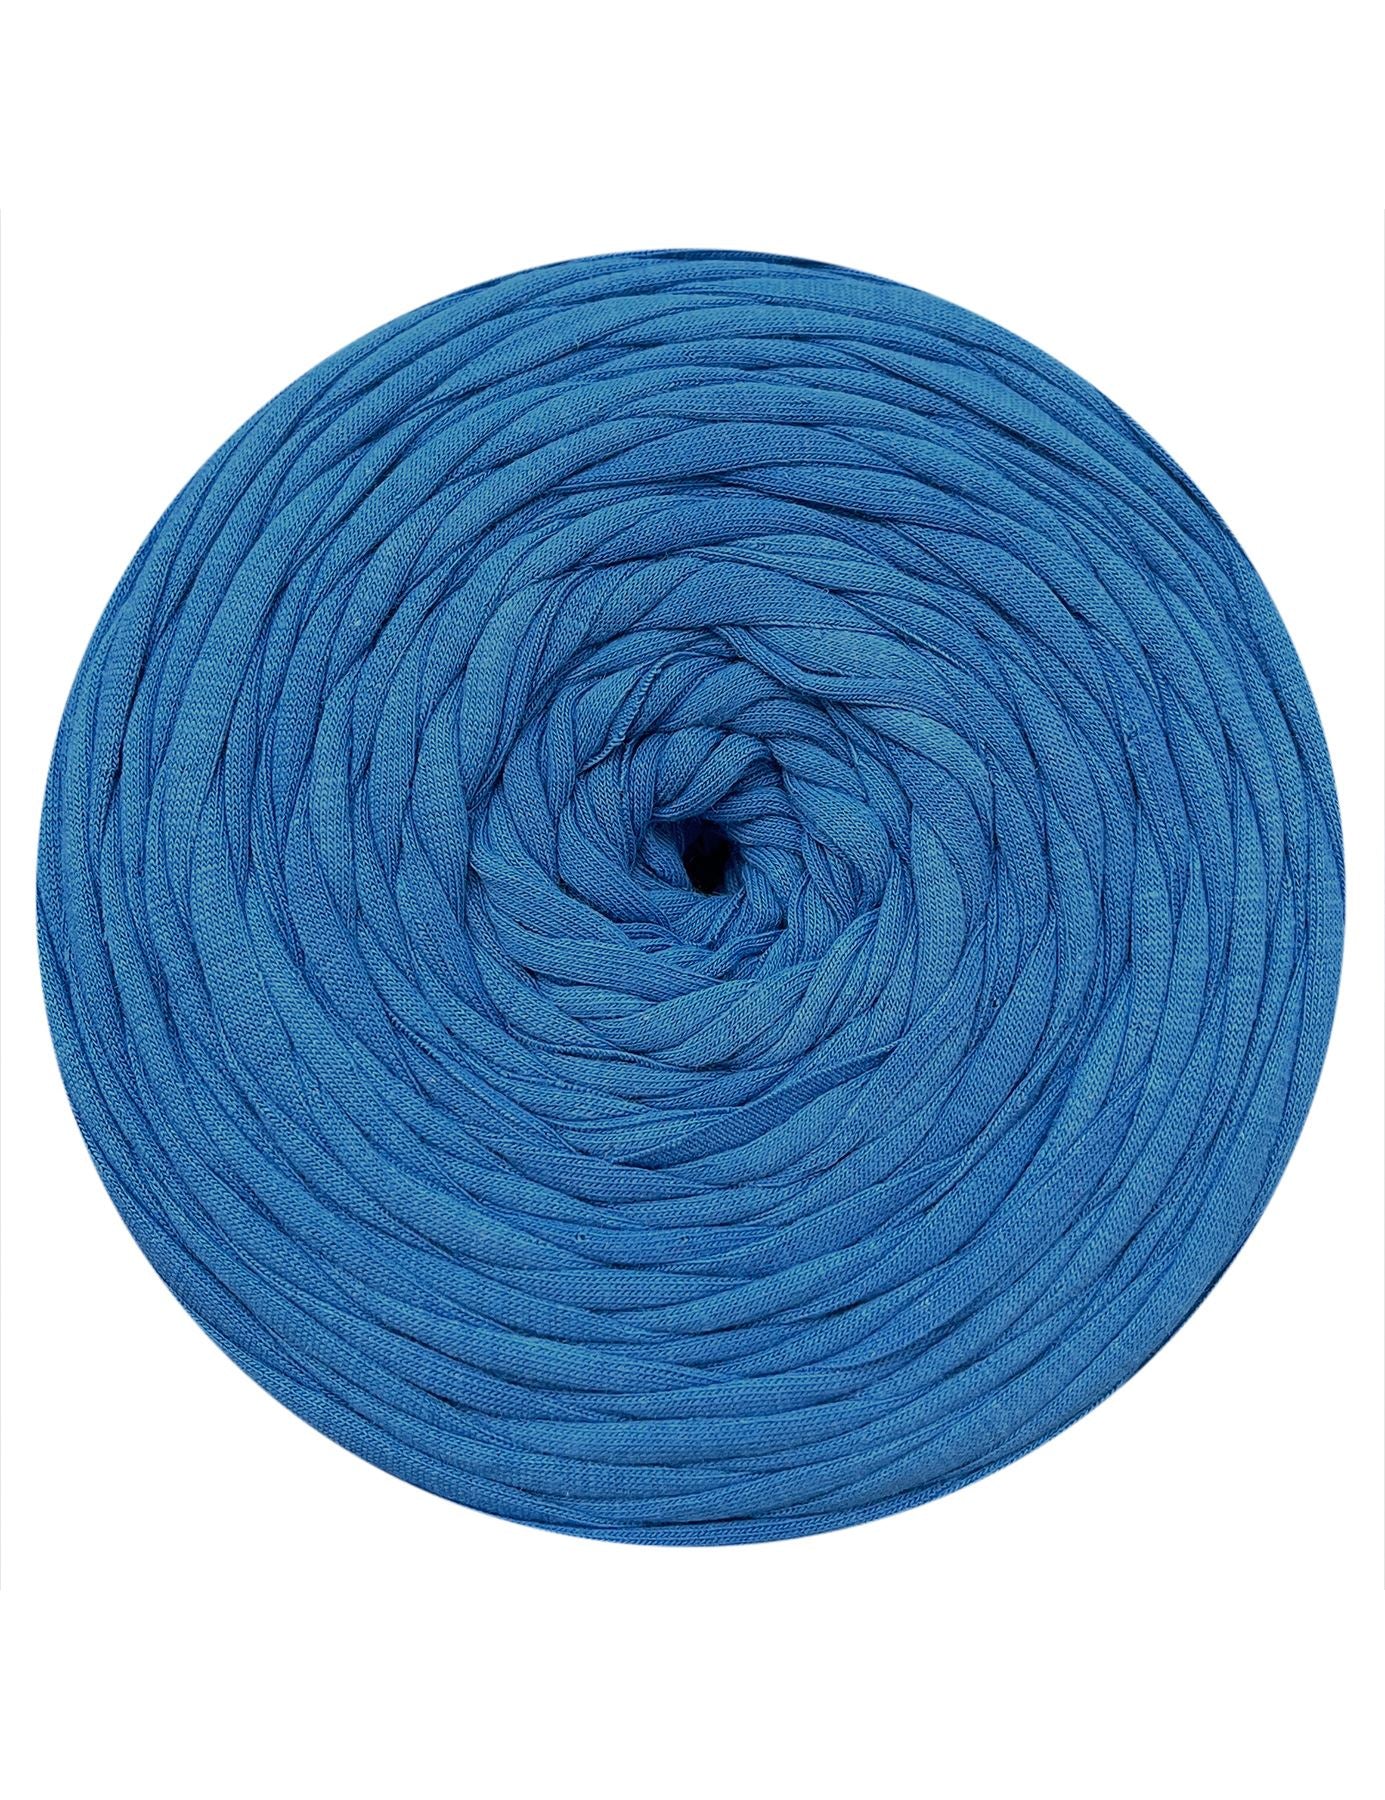 Bright steel blue t-shirt yarn (100-120m)